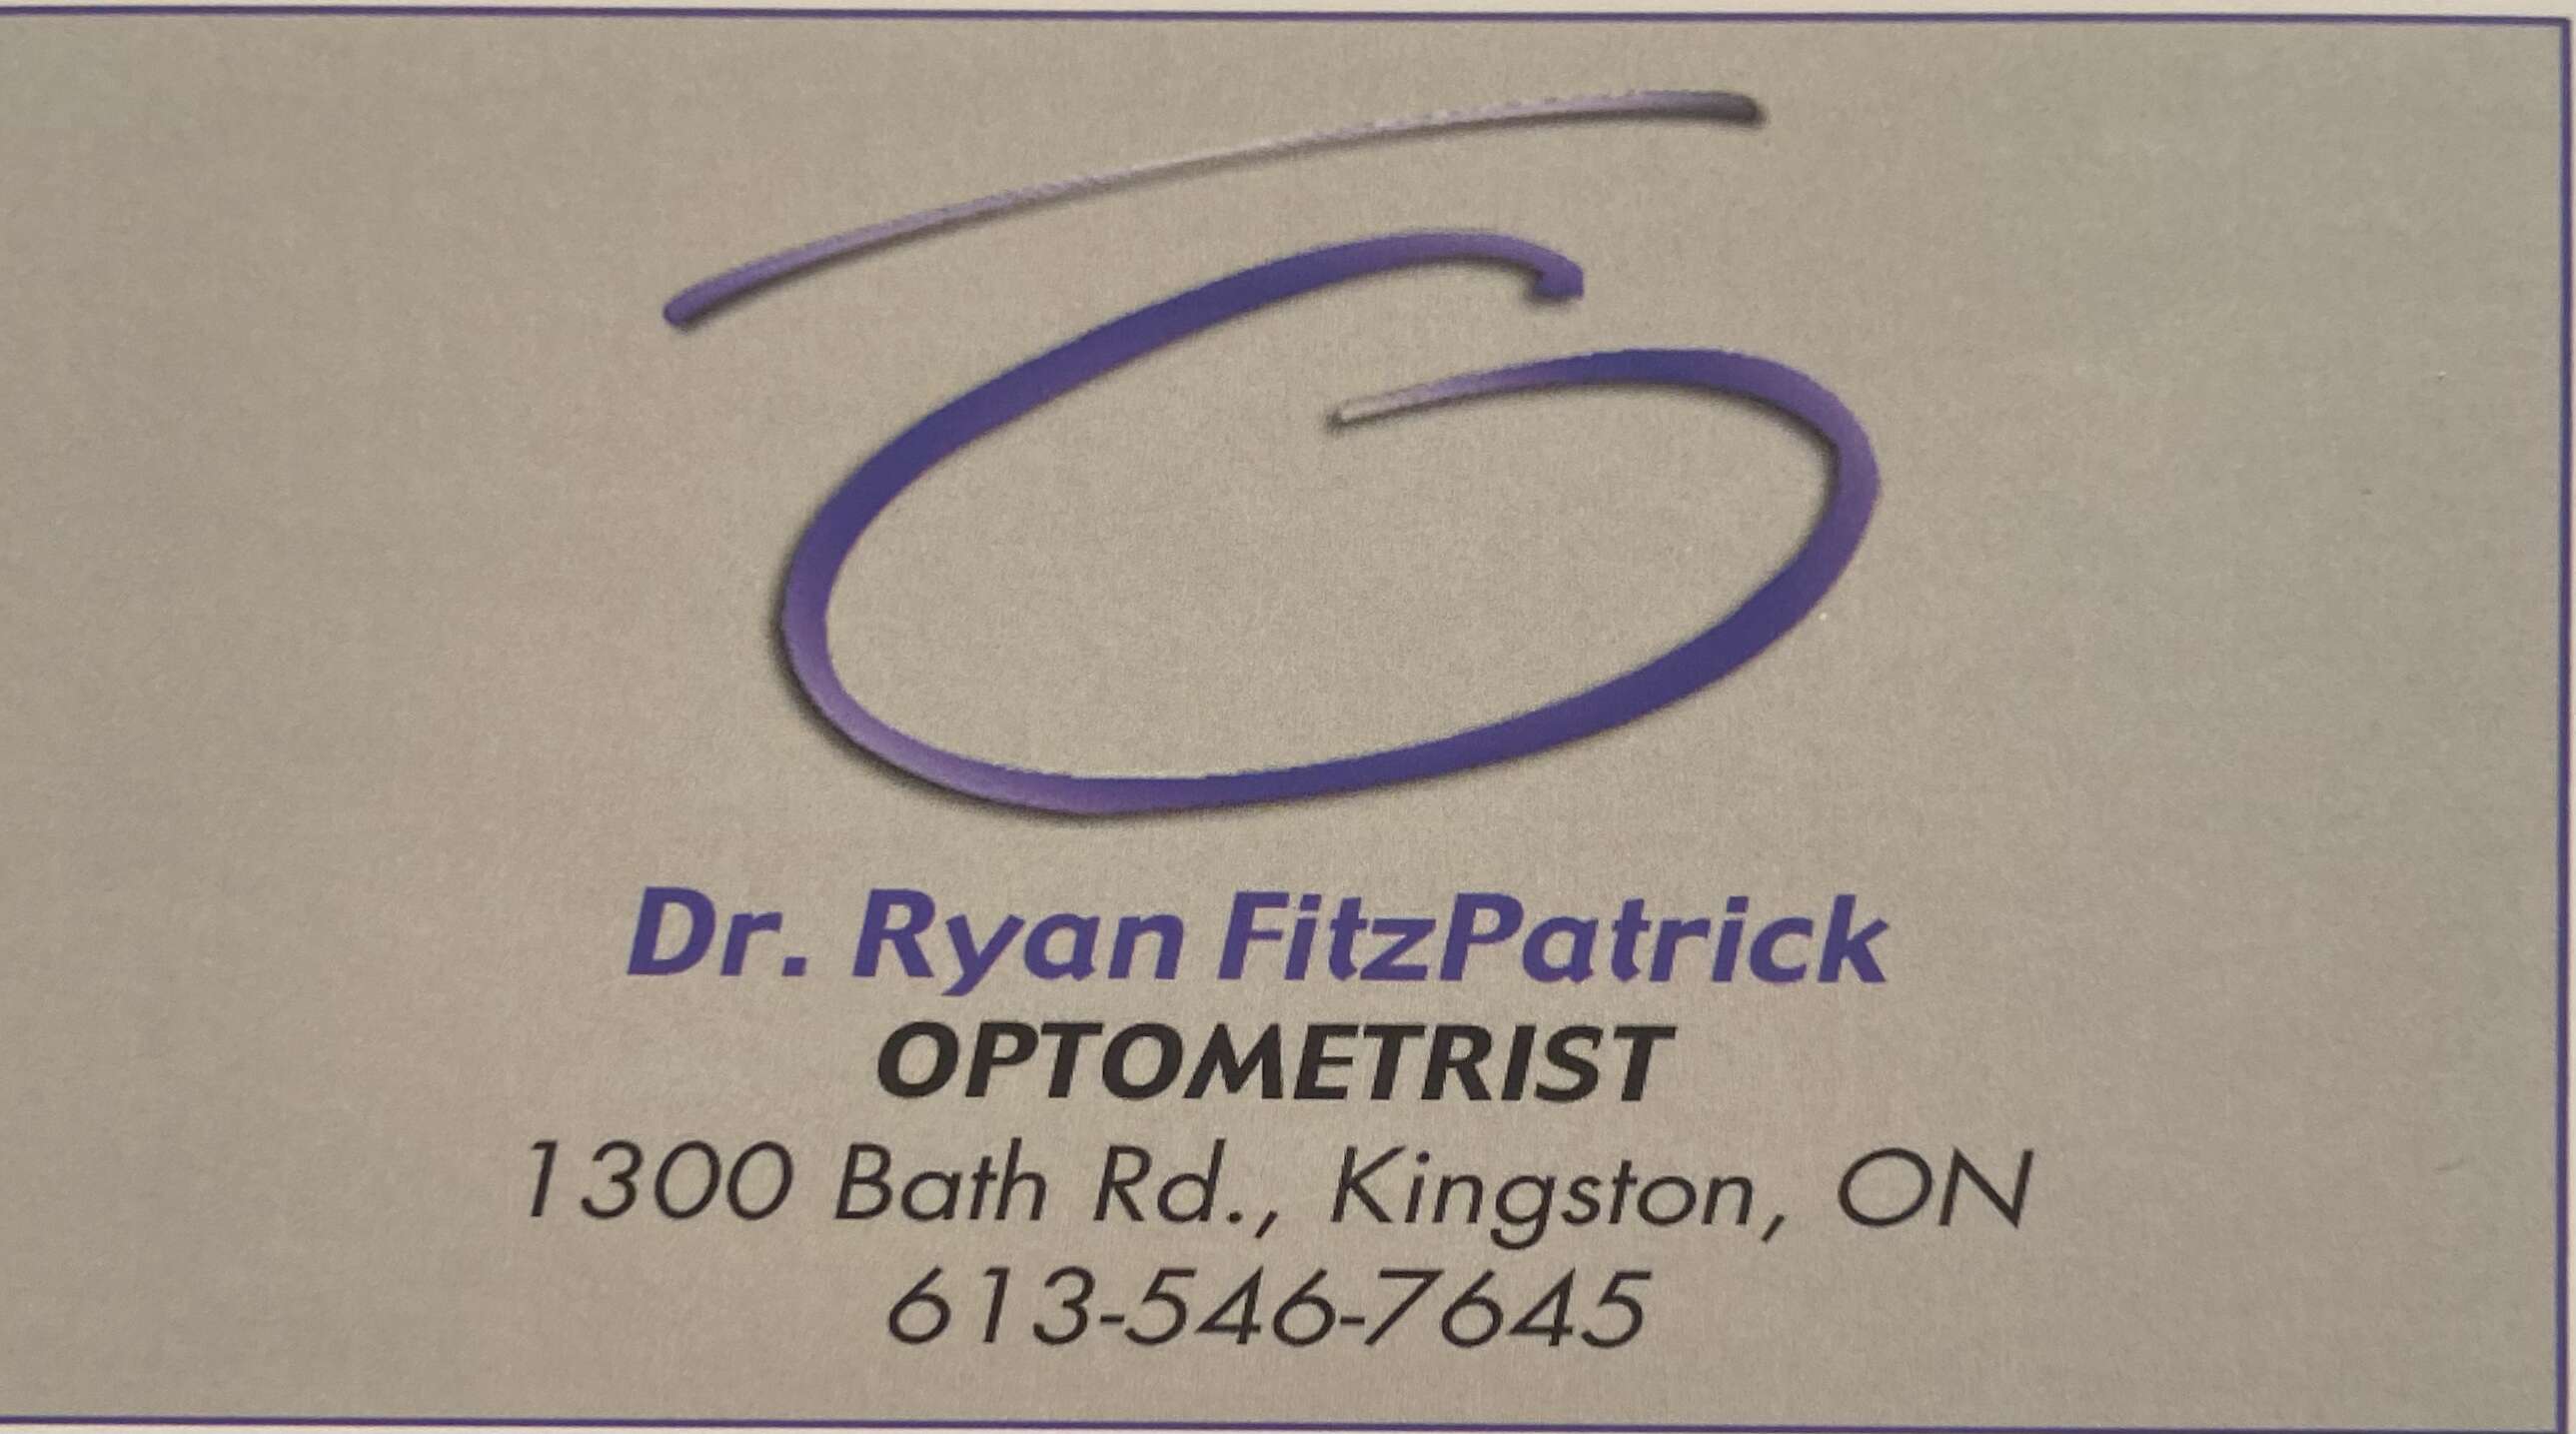 Dr. Ryan Fitzpatrick Optometrist   613-546-7645